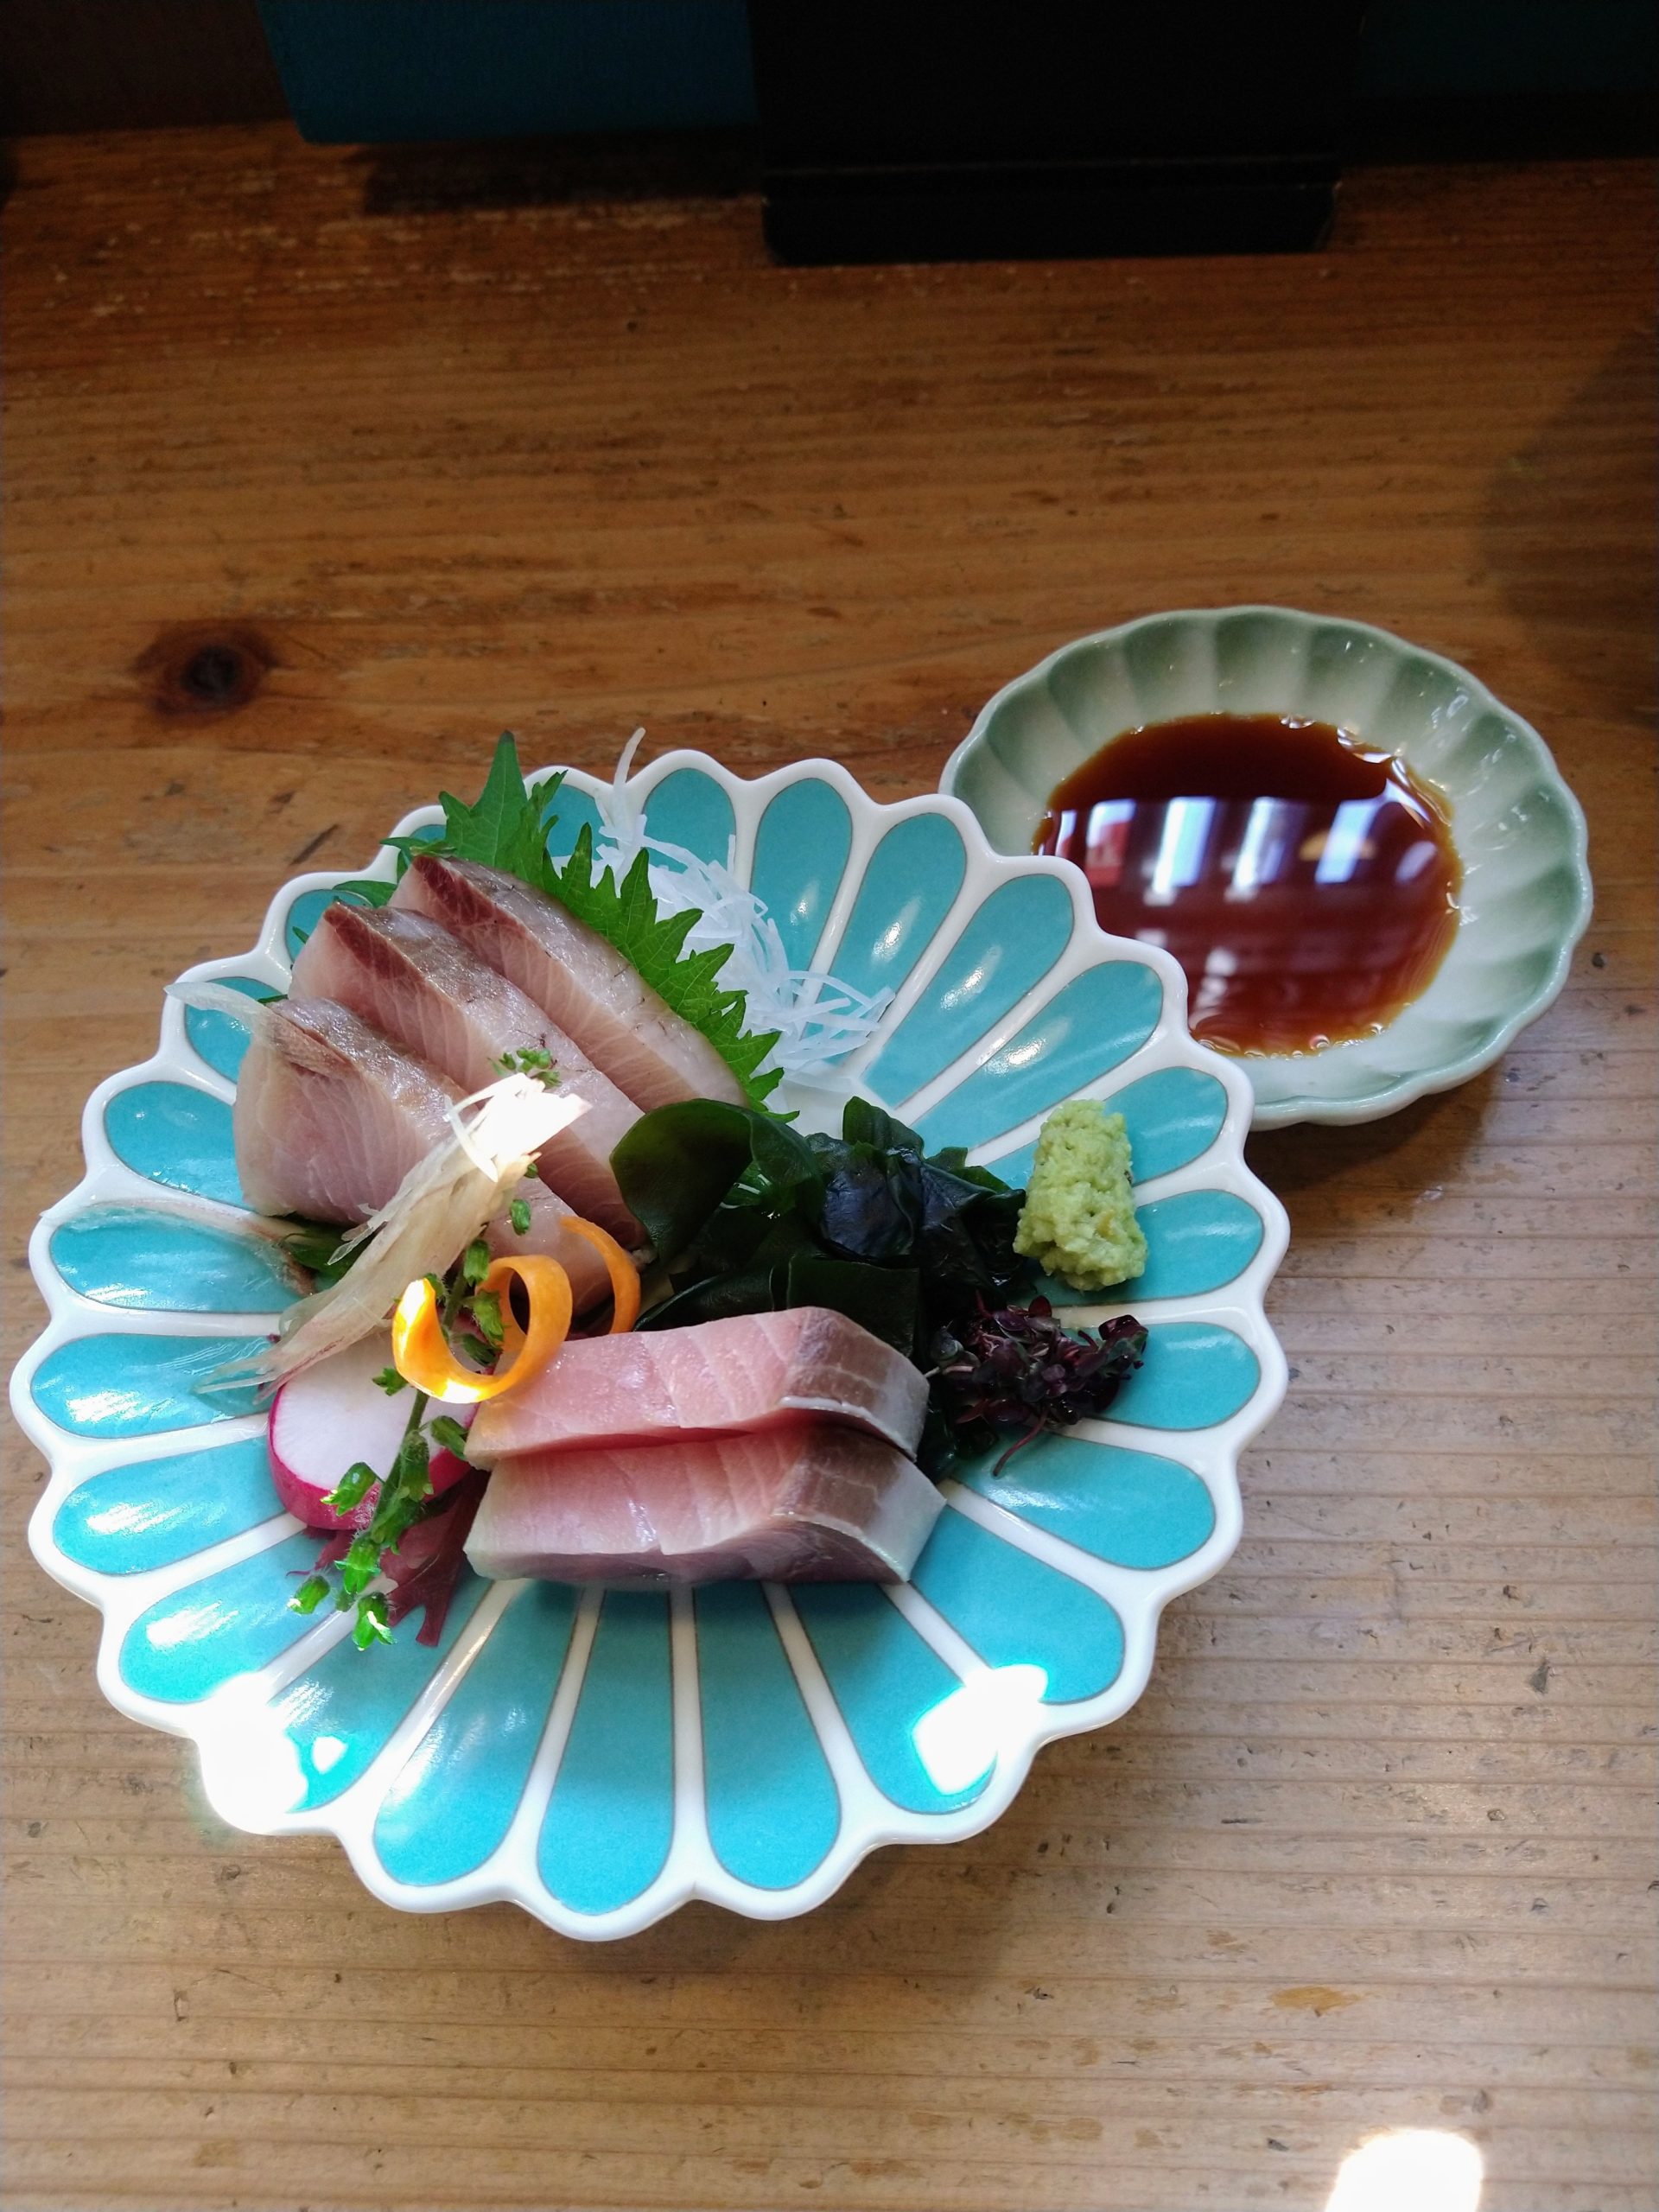 sengawa-soba-ishihara-cuisine-137